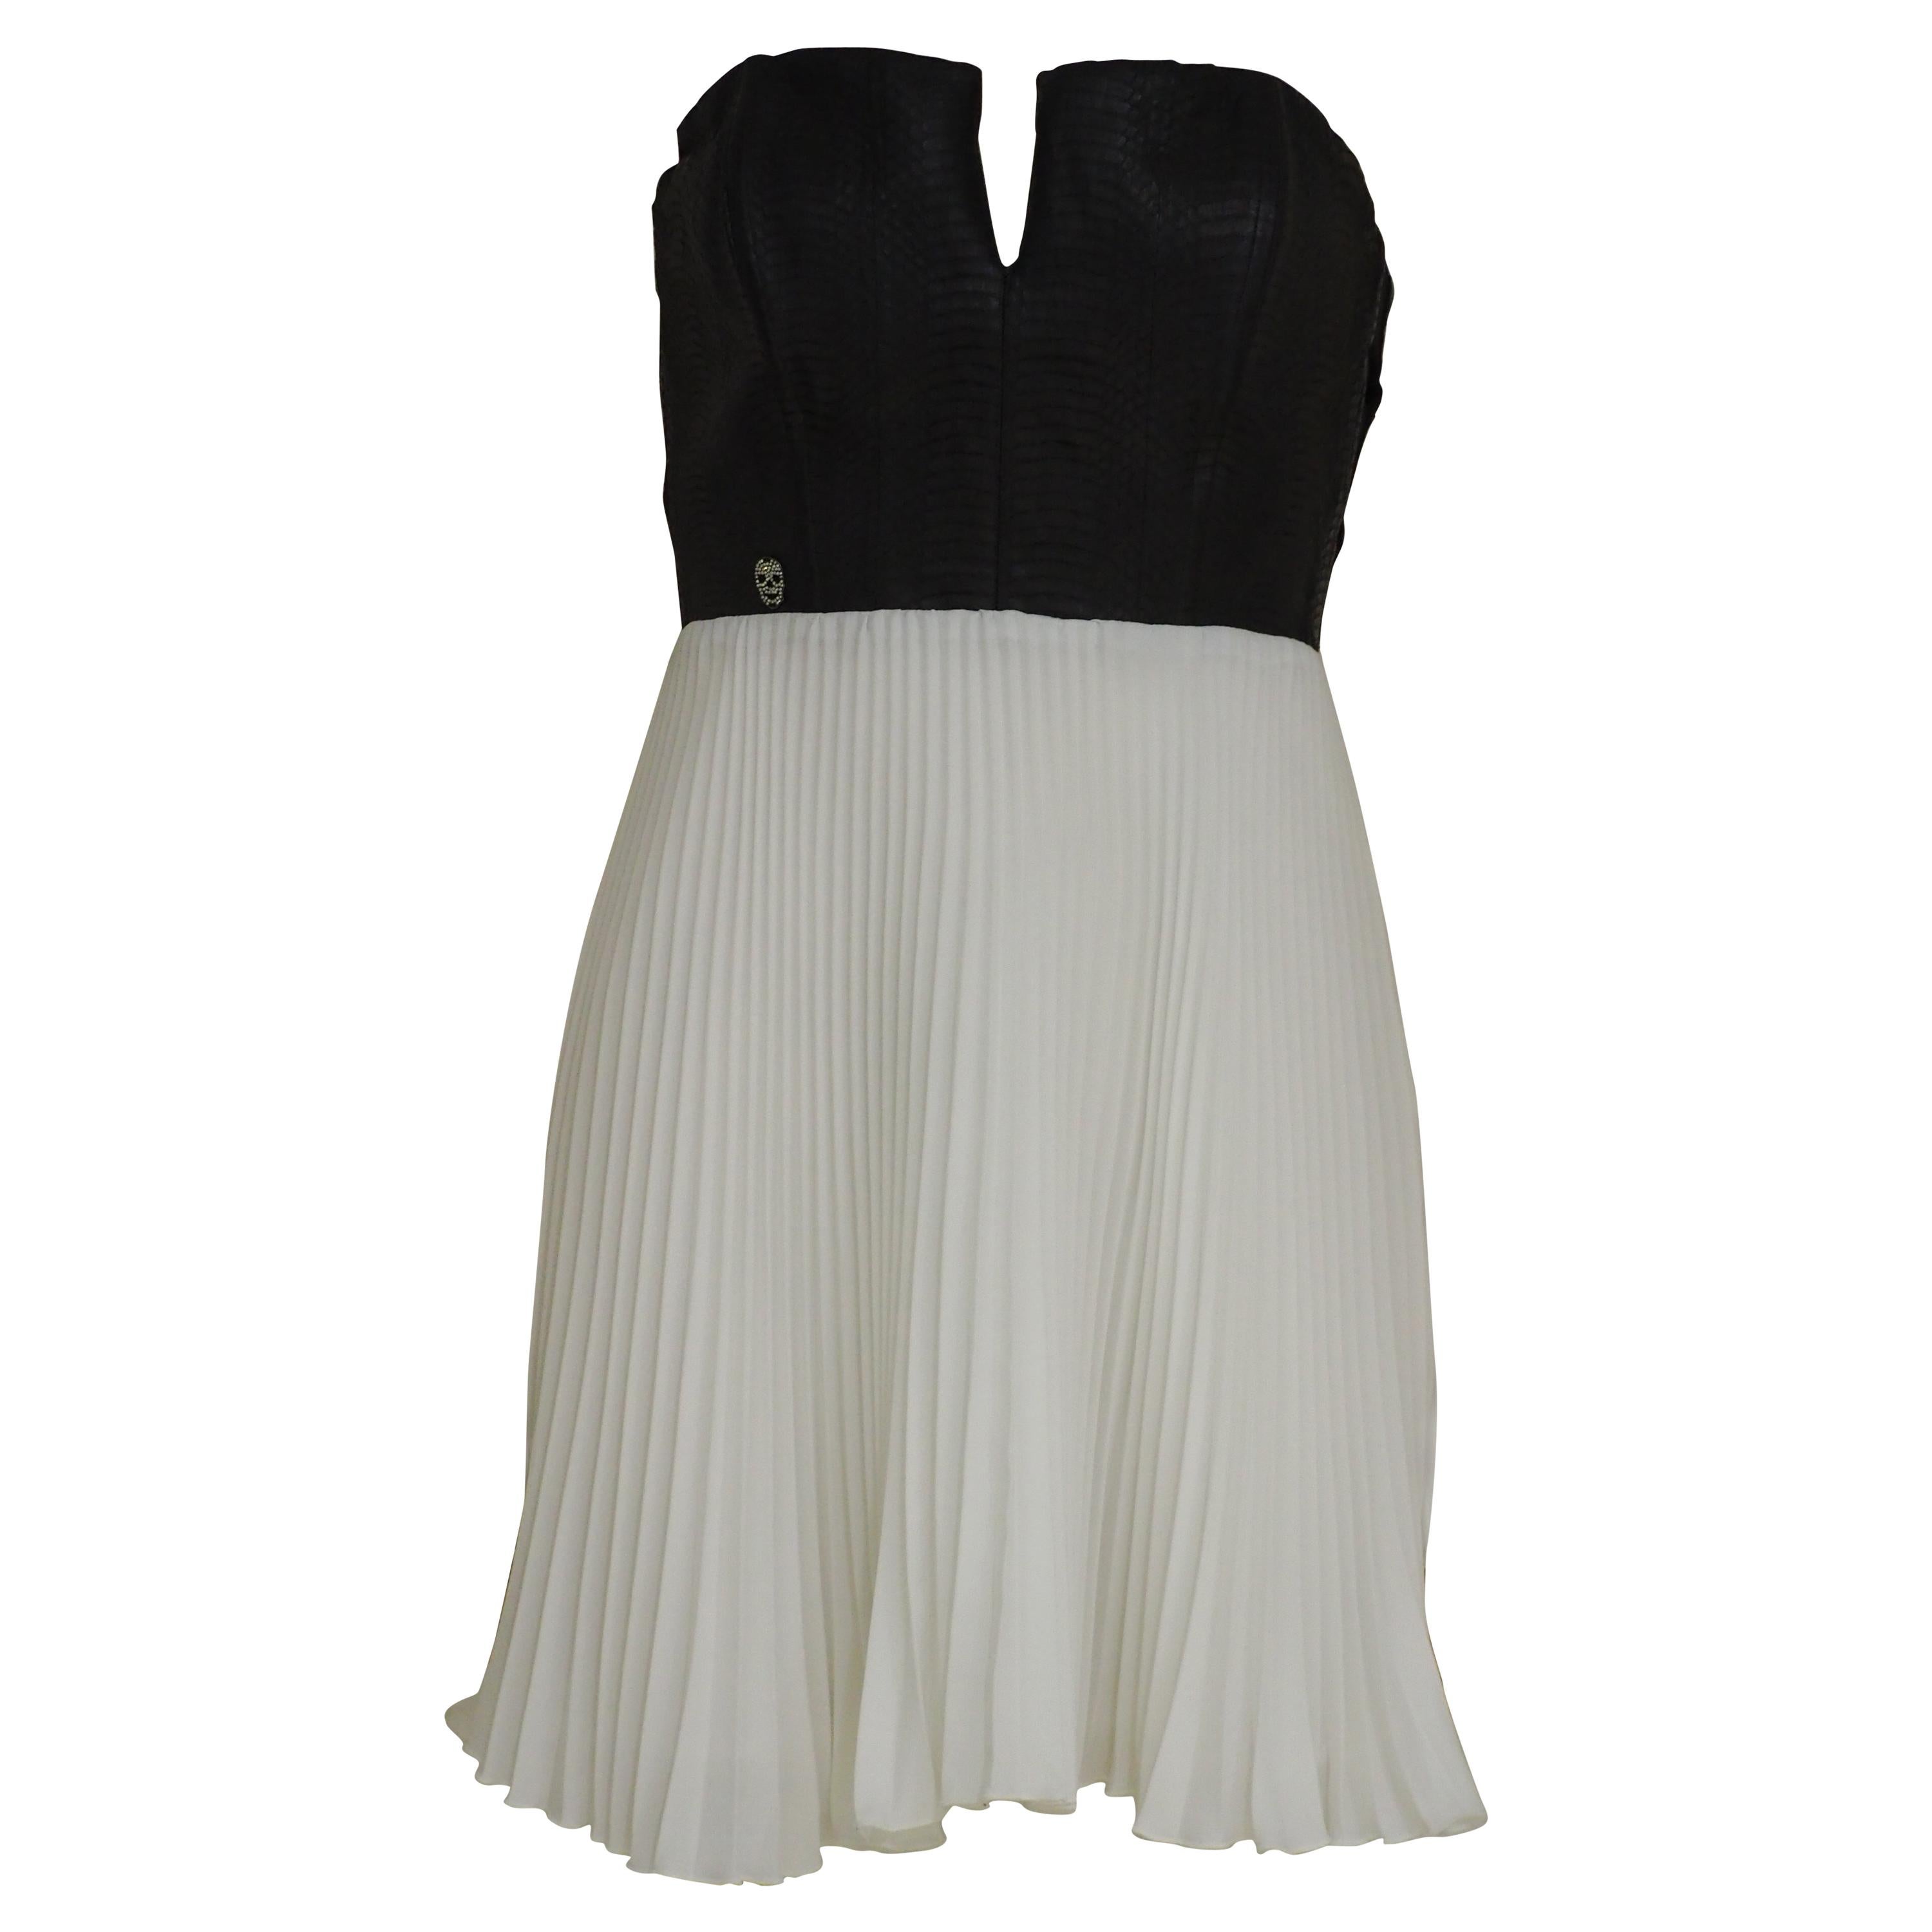 Philipp Plein black and white dress For Sale